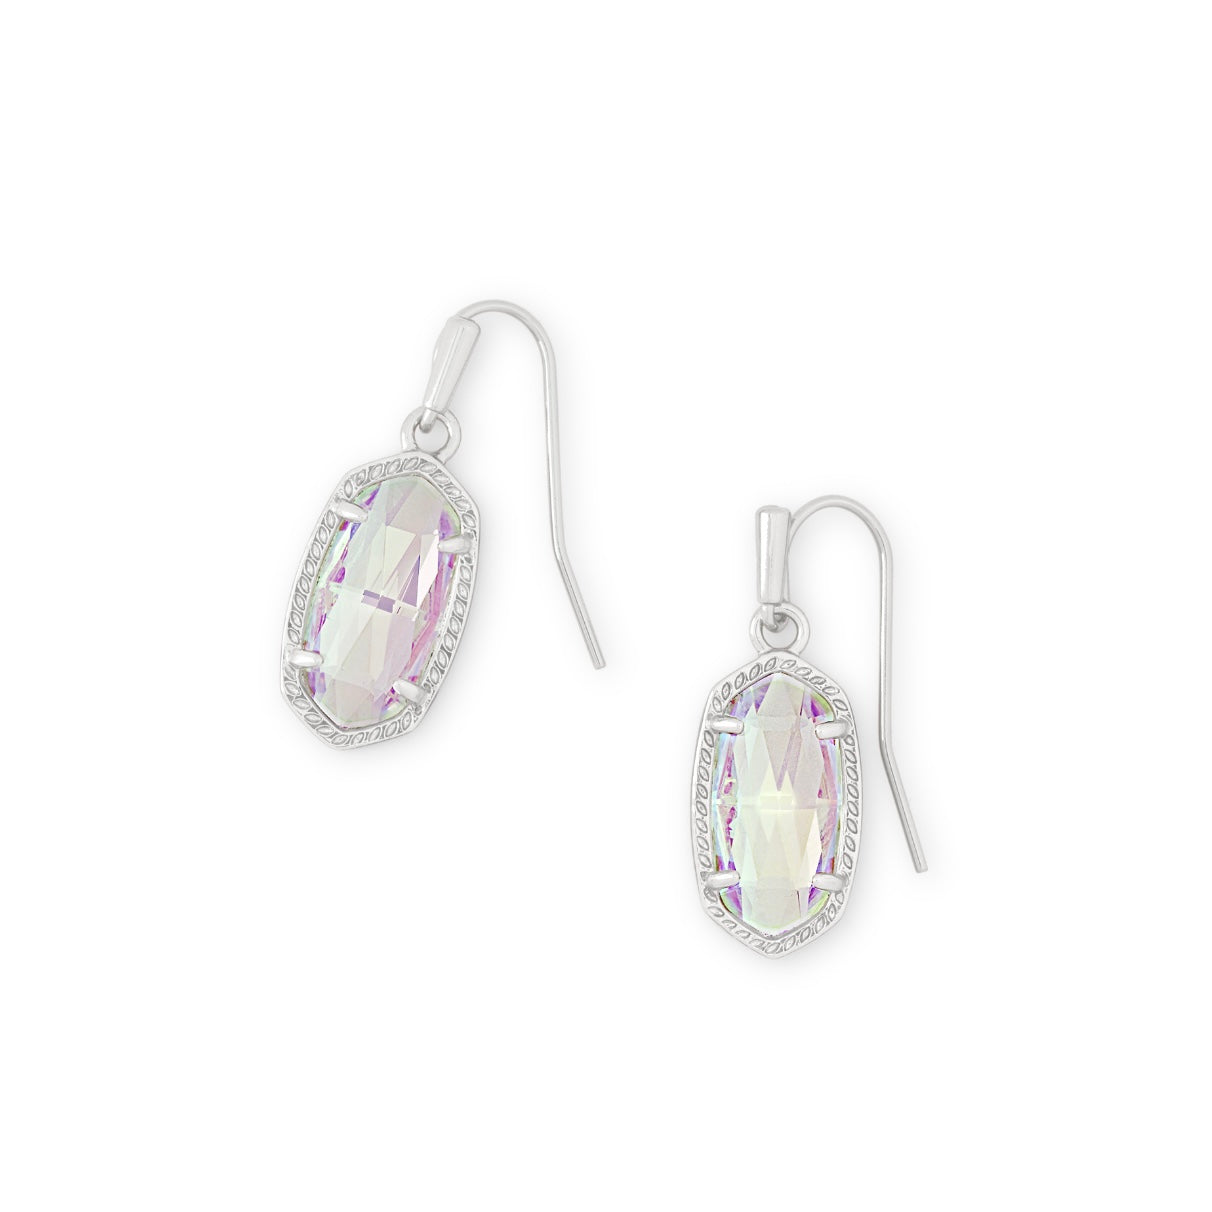 KENDRA SCOTT Lee Drop Silver Earrings in Dichroic Glass - The Street Boutique 